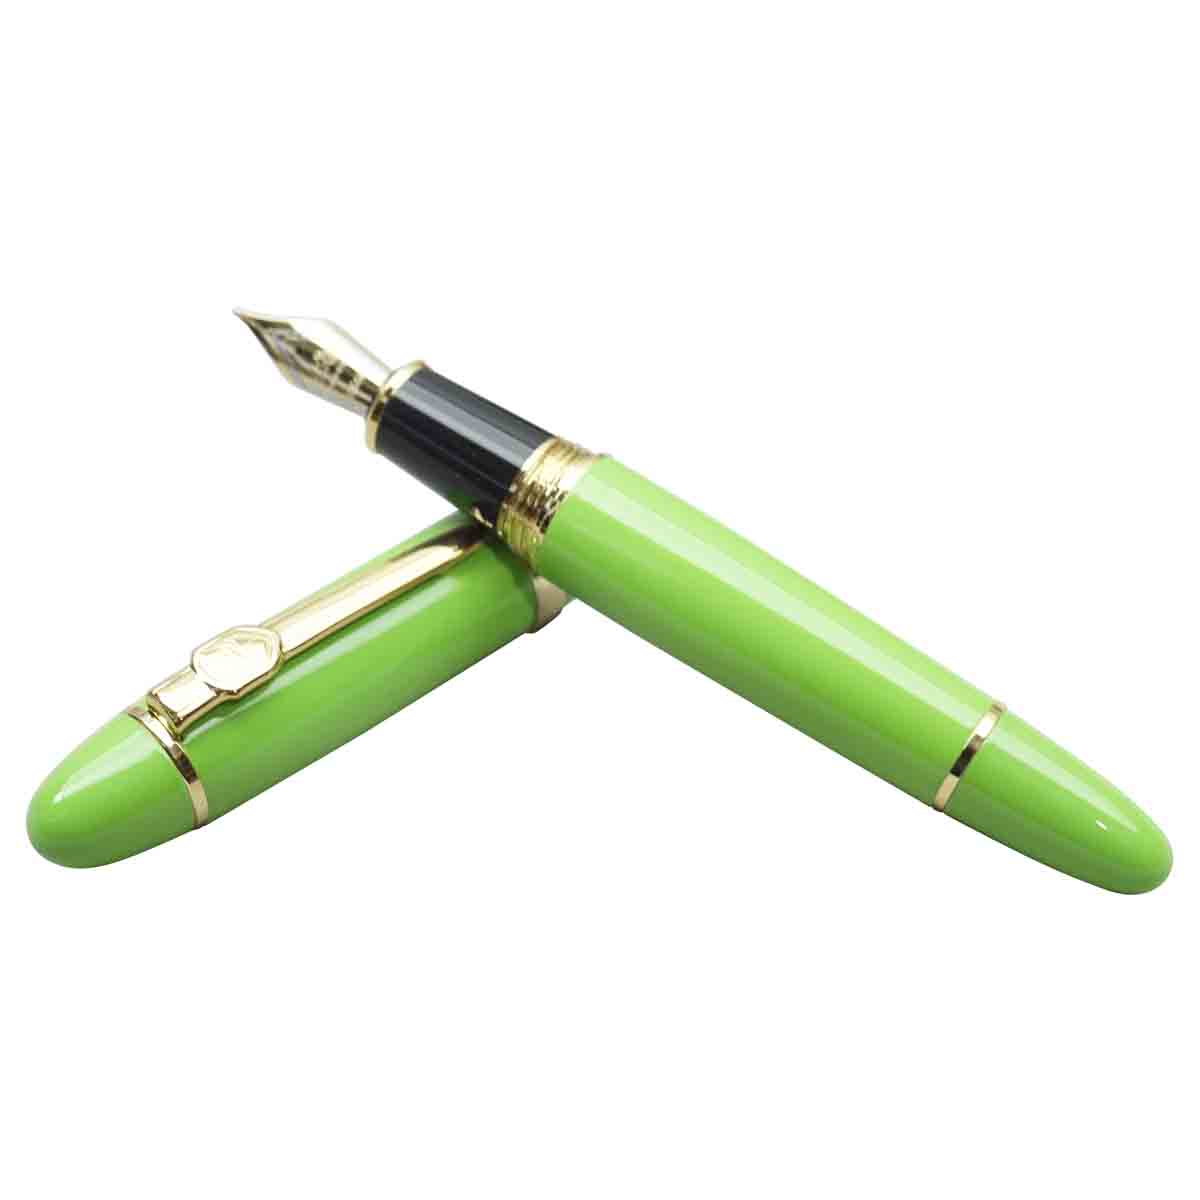 Jinhao 159 - Green Golor Body and Cap Convertoer Type Fountain Pen with No.35 Dual Tone Medium Nib SKU 19629